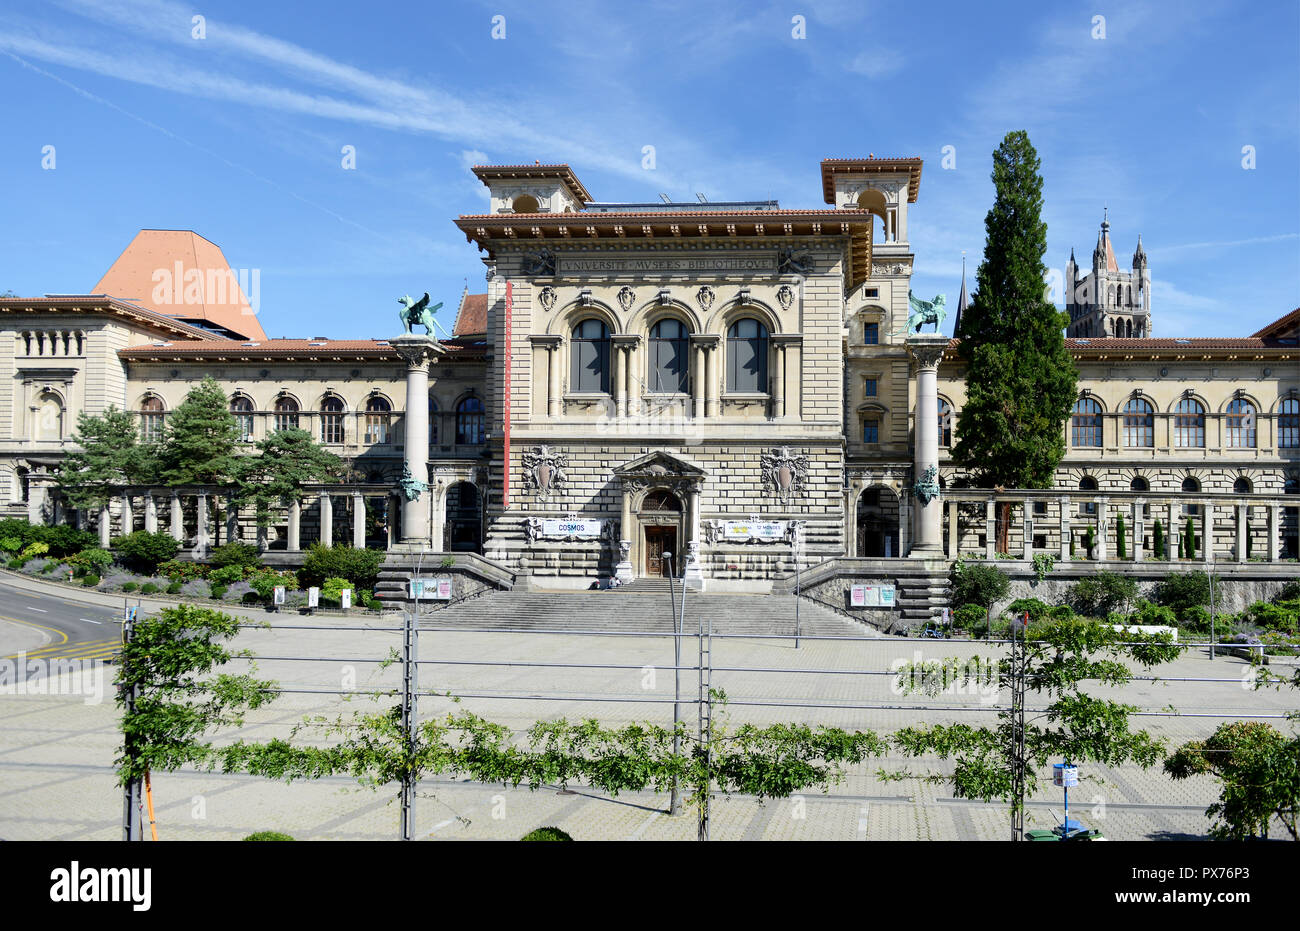 Palais de Rumine in Lausanne, Switzerland Stock Photo